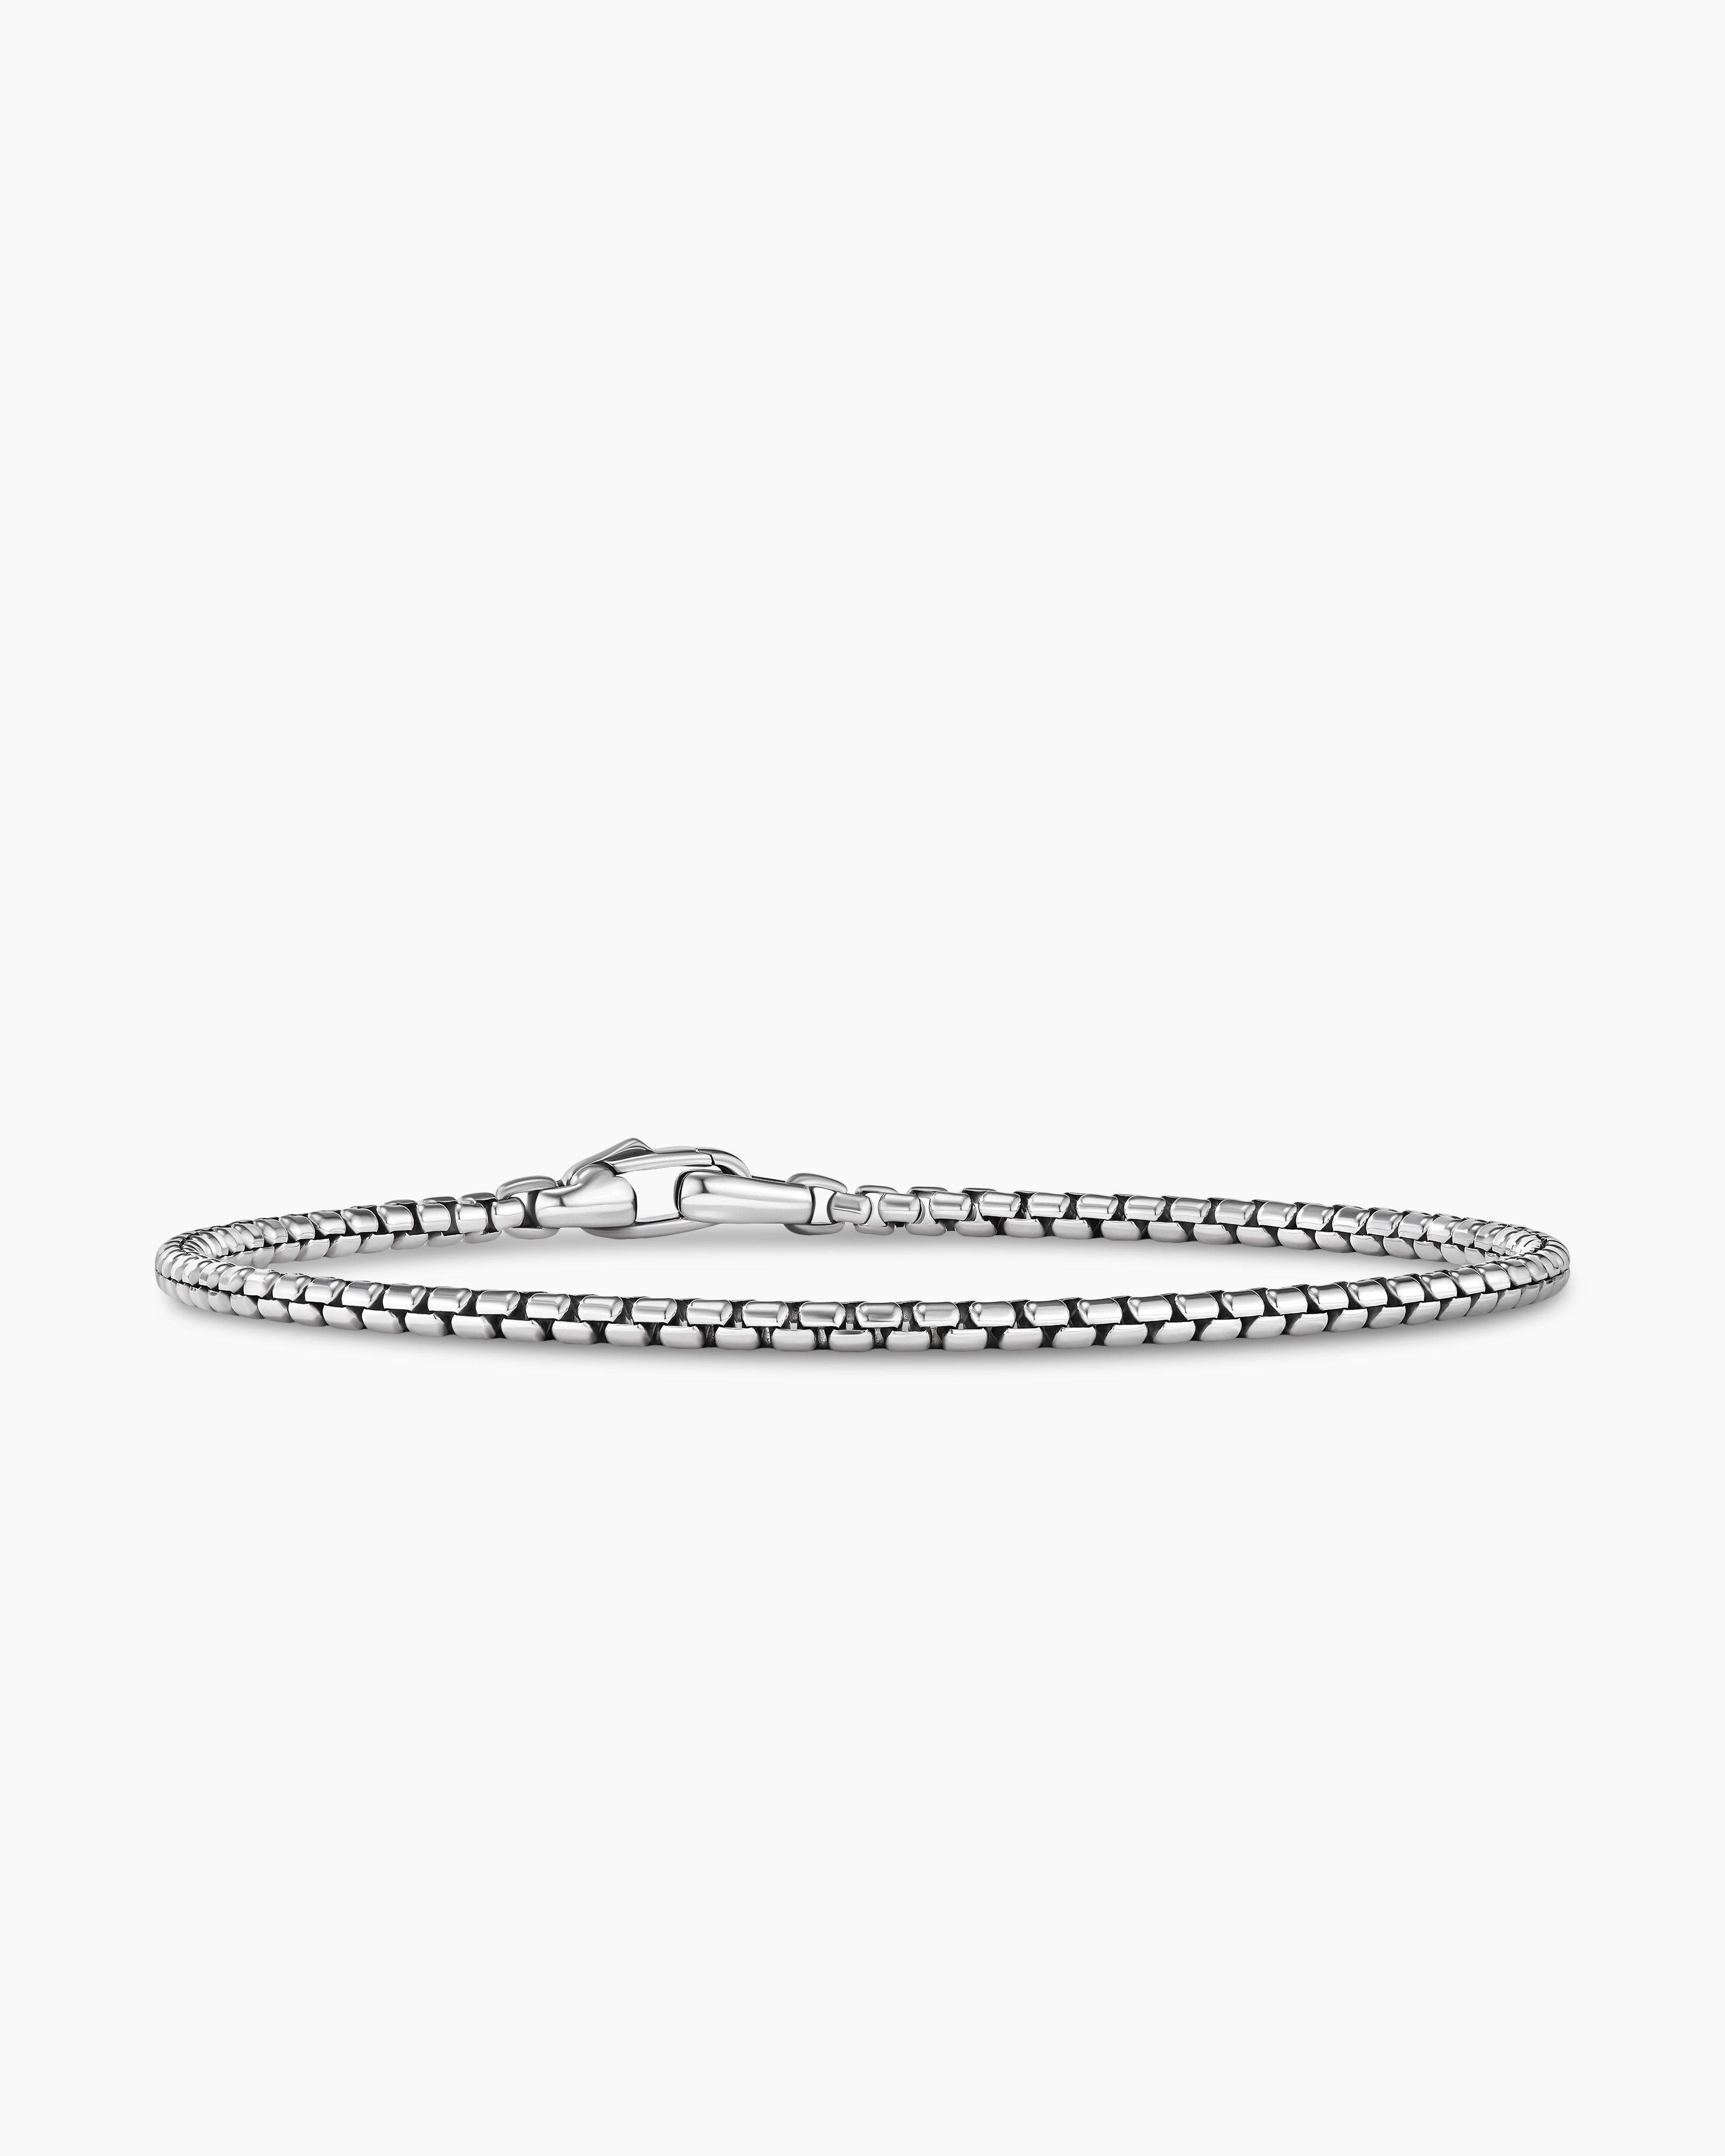 David Yurman Men's Medium Box Chain Bracelet - Silver